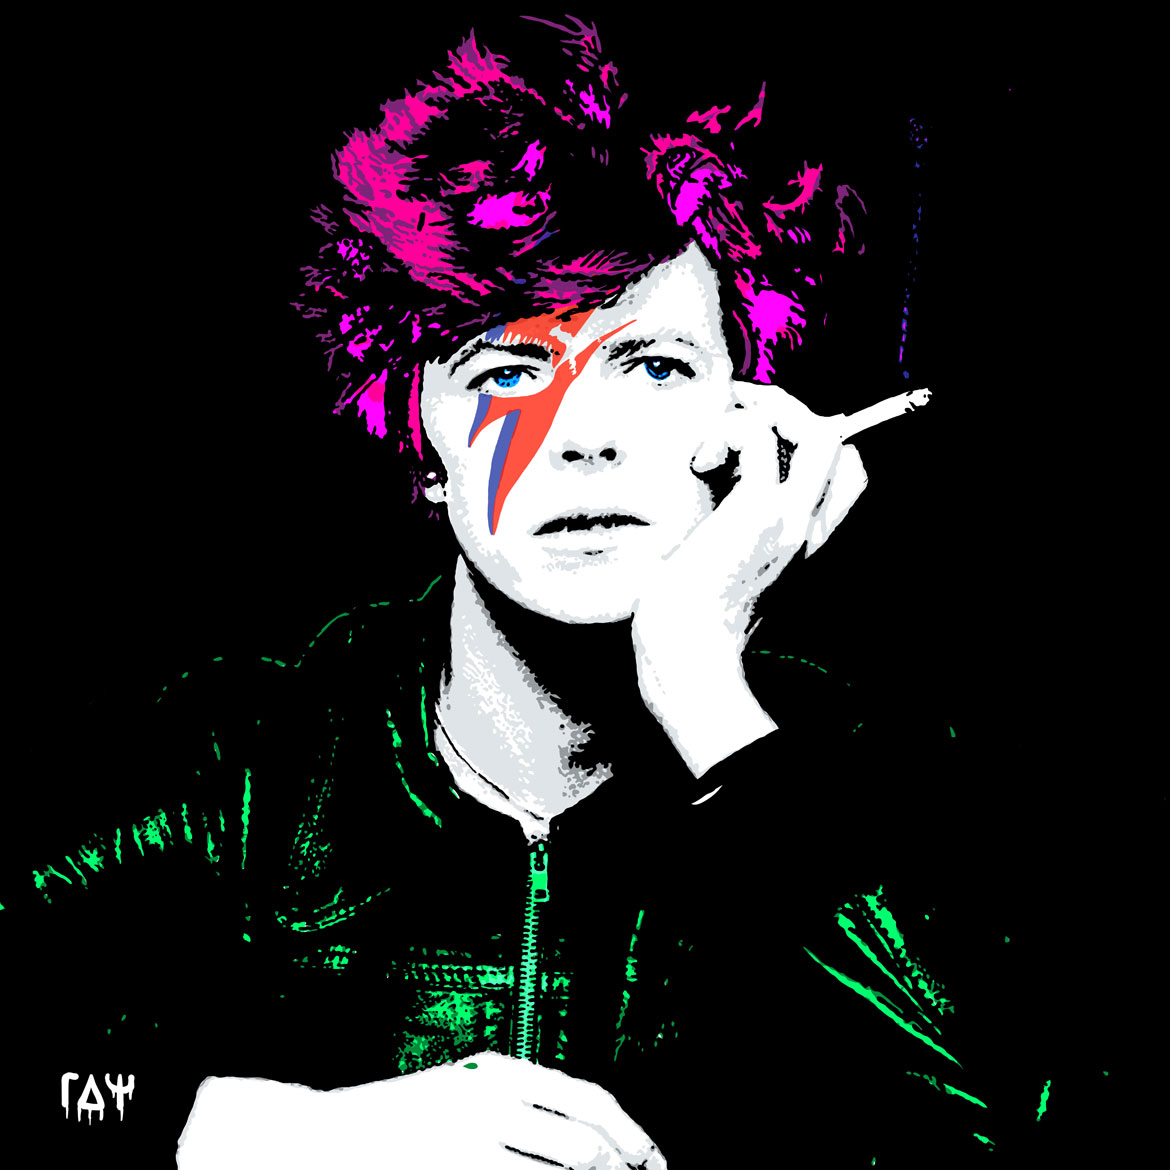 David Bowie smoking habits